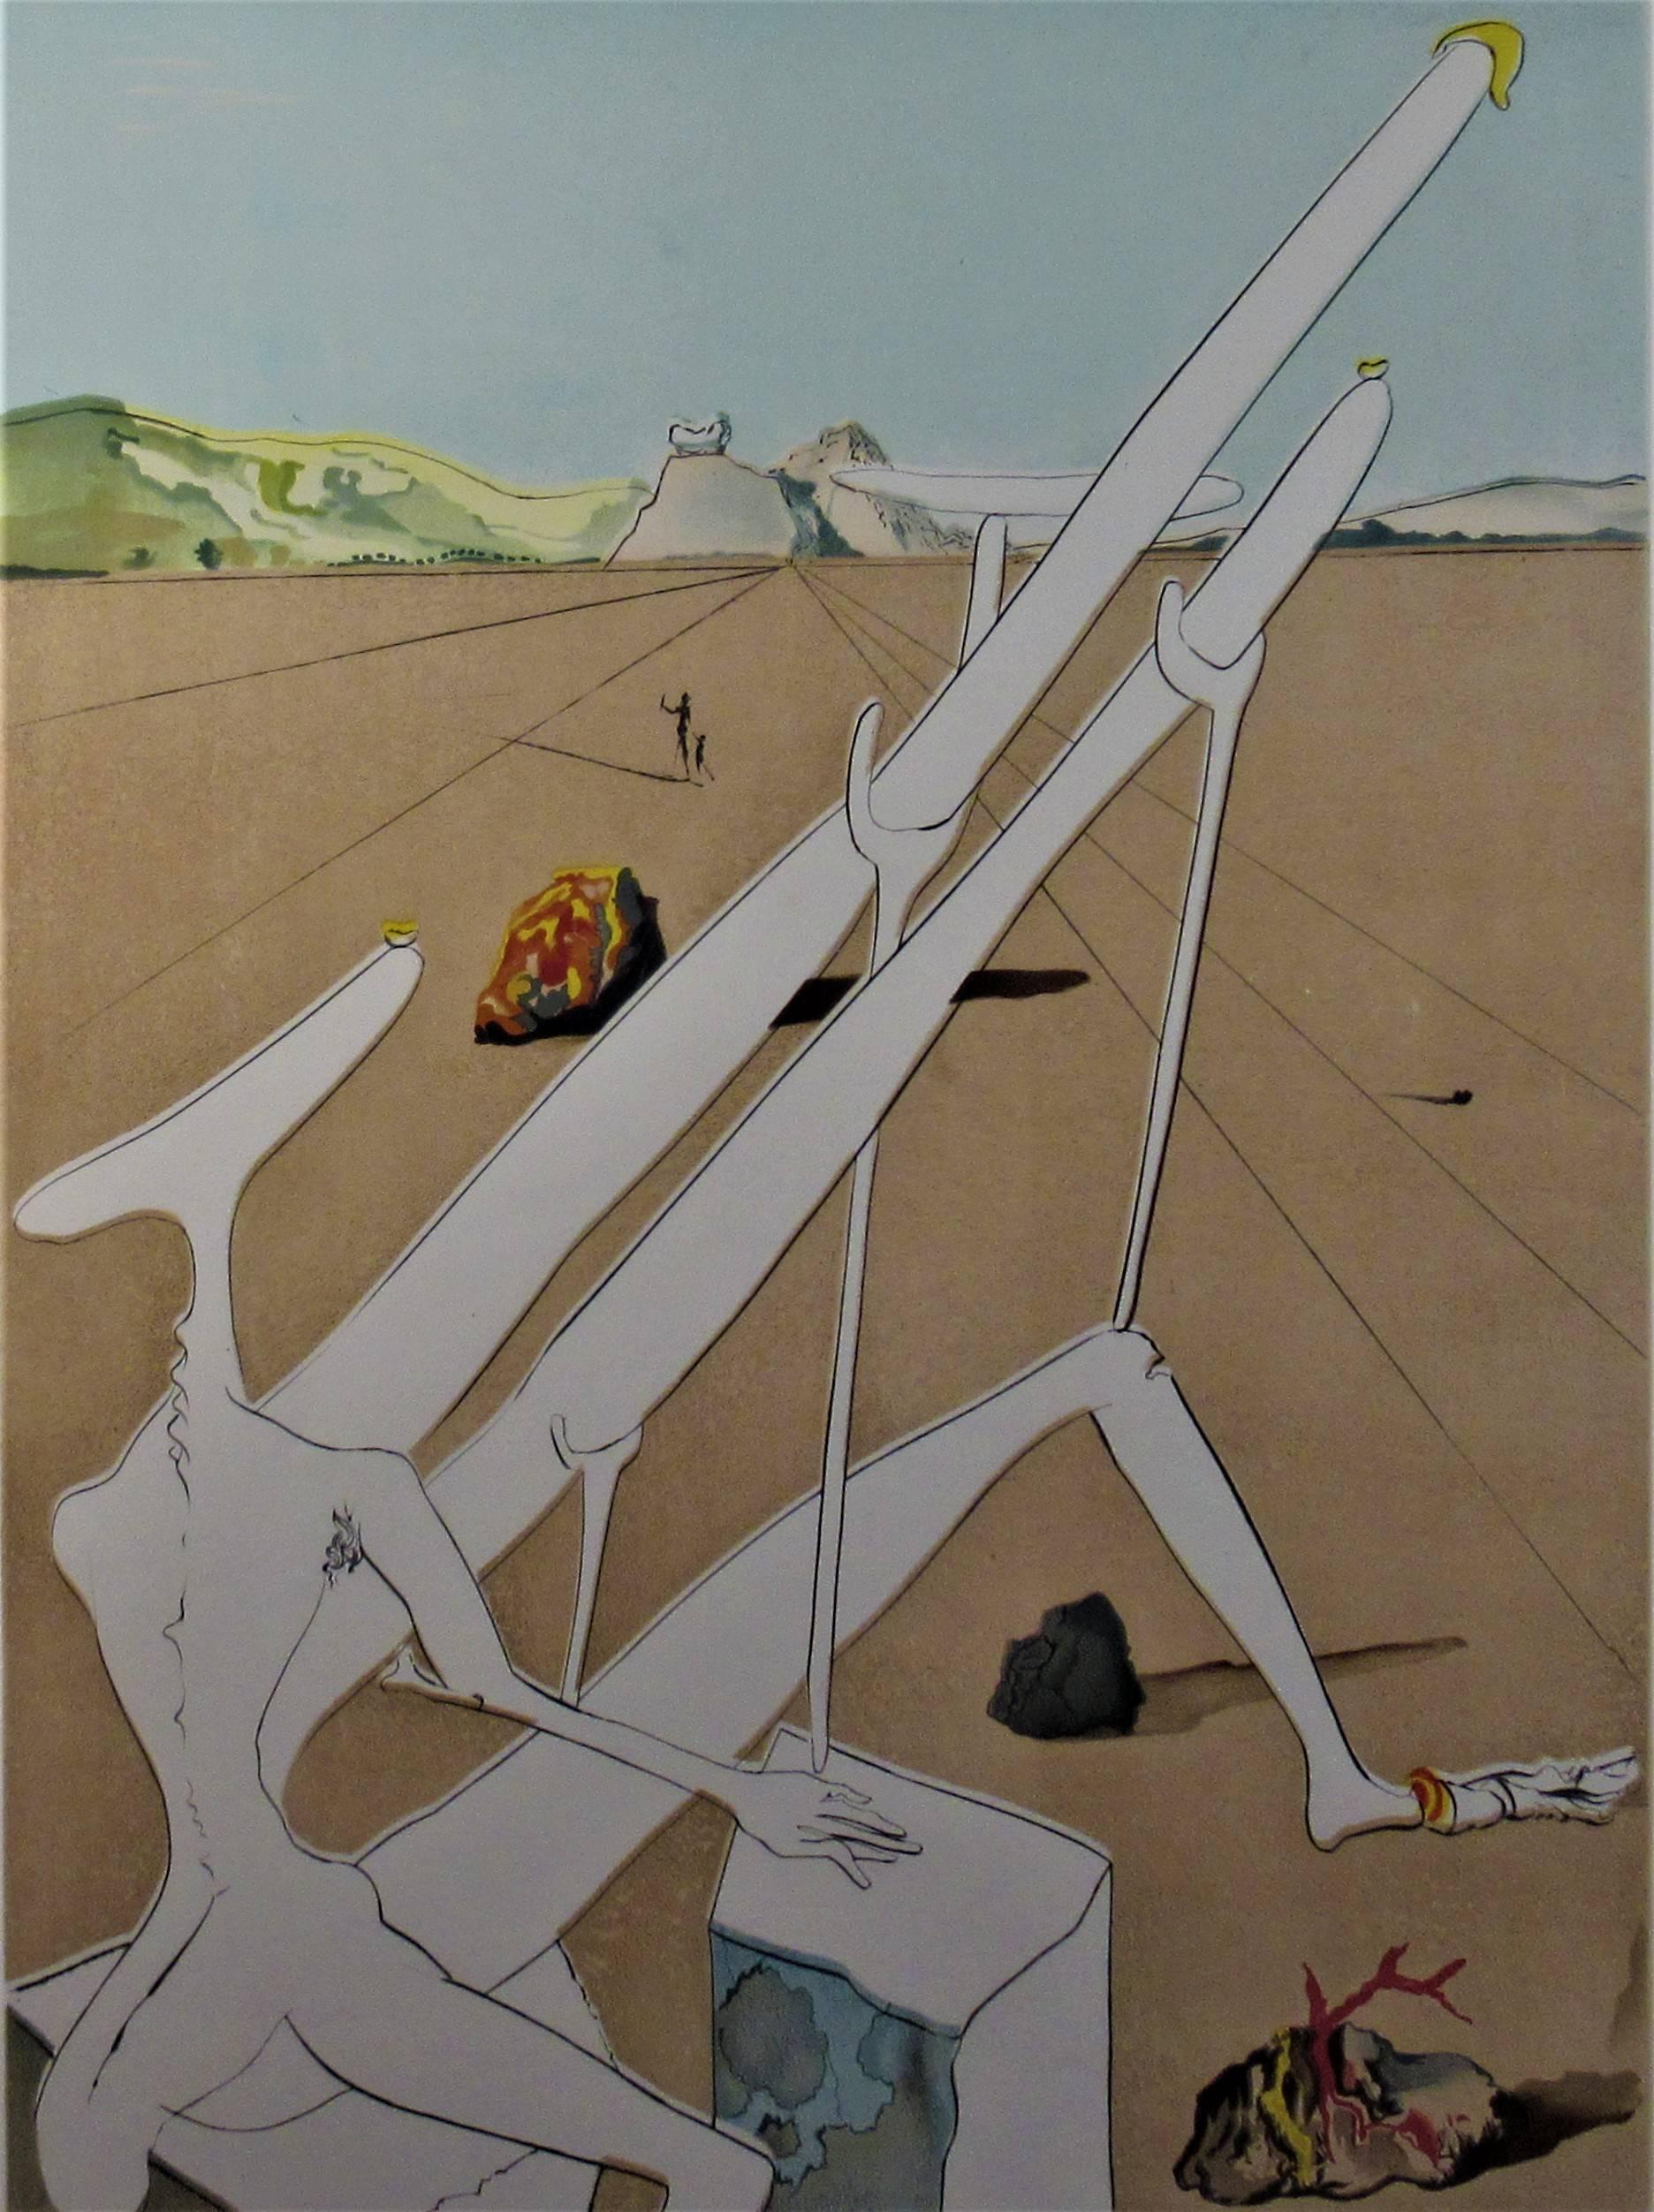 Dali Martian muni d'un Double Microscope Holoelectronique - Print by Salvador Dalí